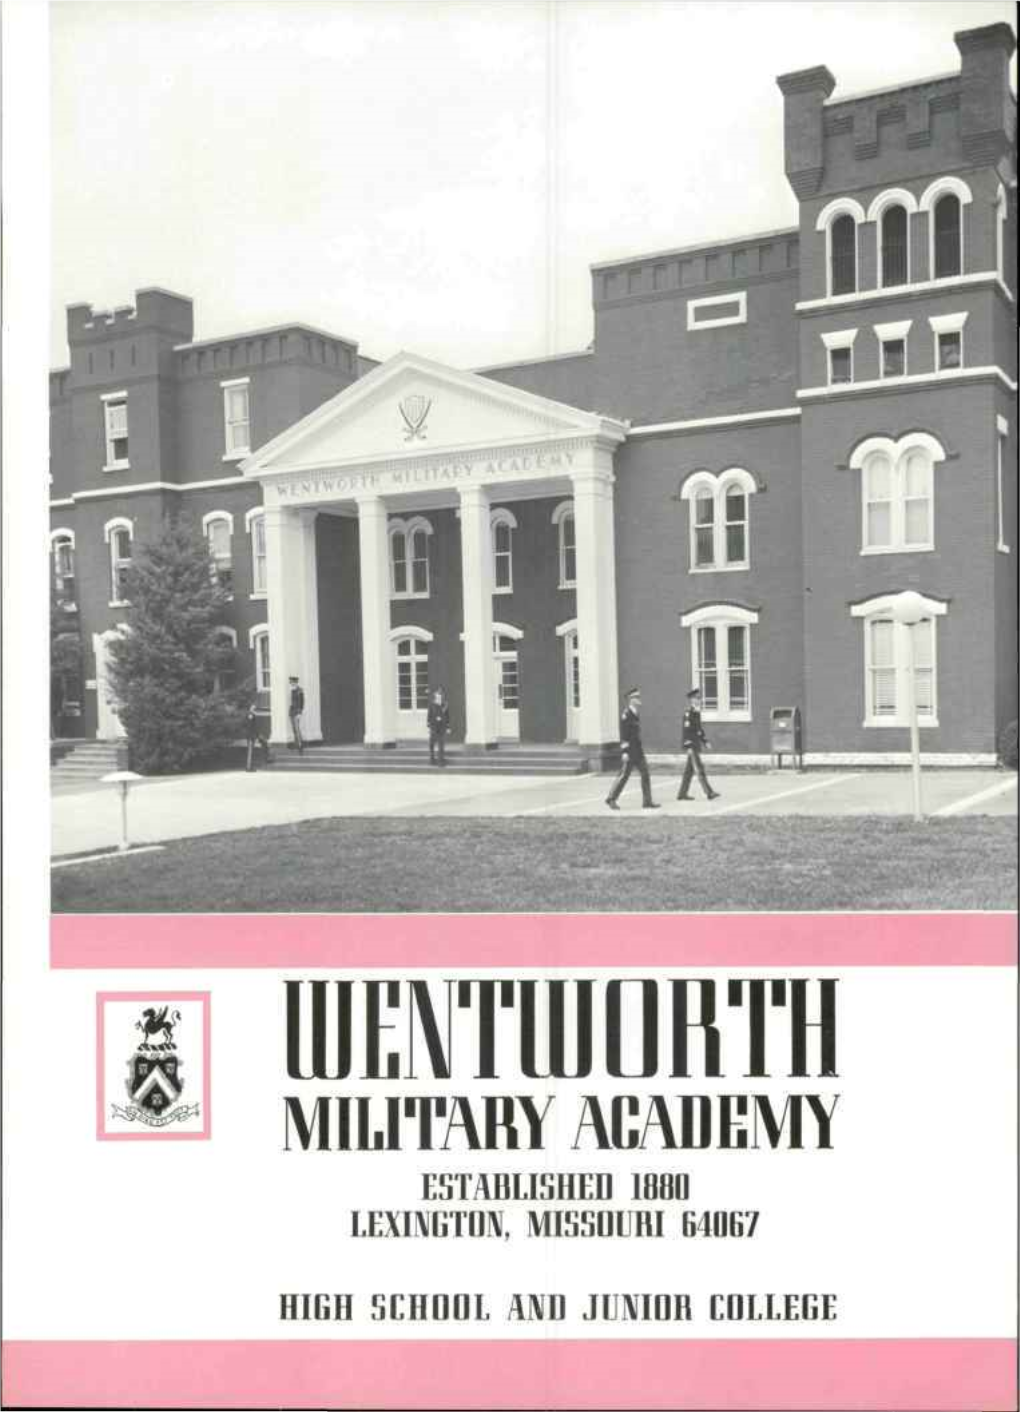 Military Academy Estarlished 1880 Lexiivgton, Missouri G4dg7